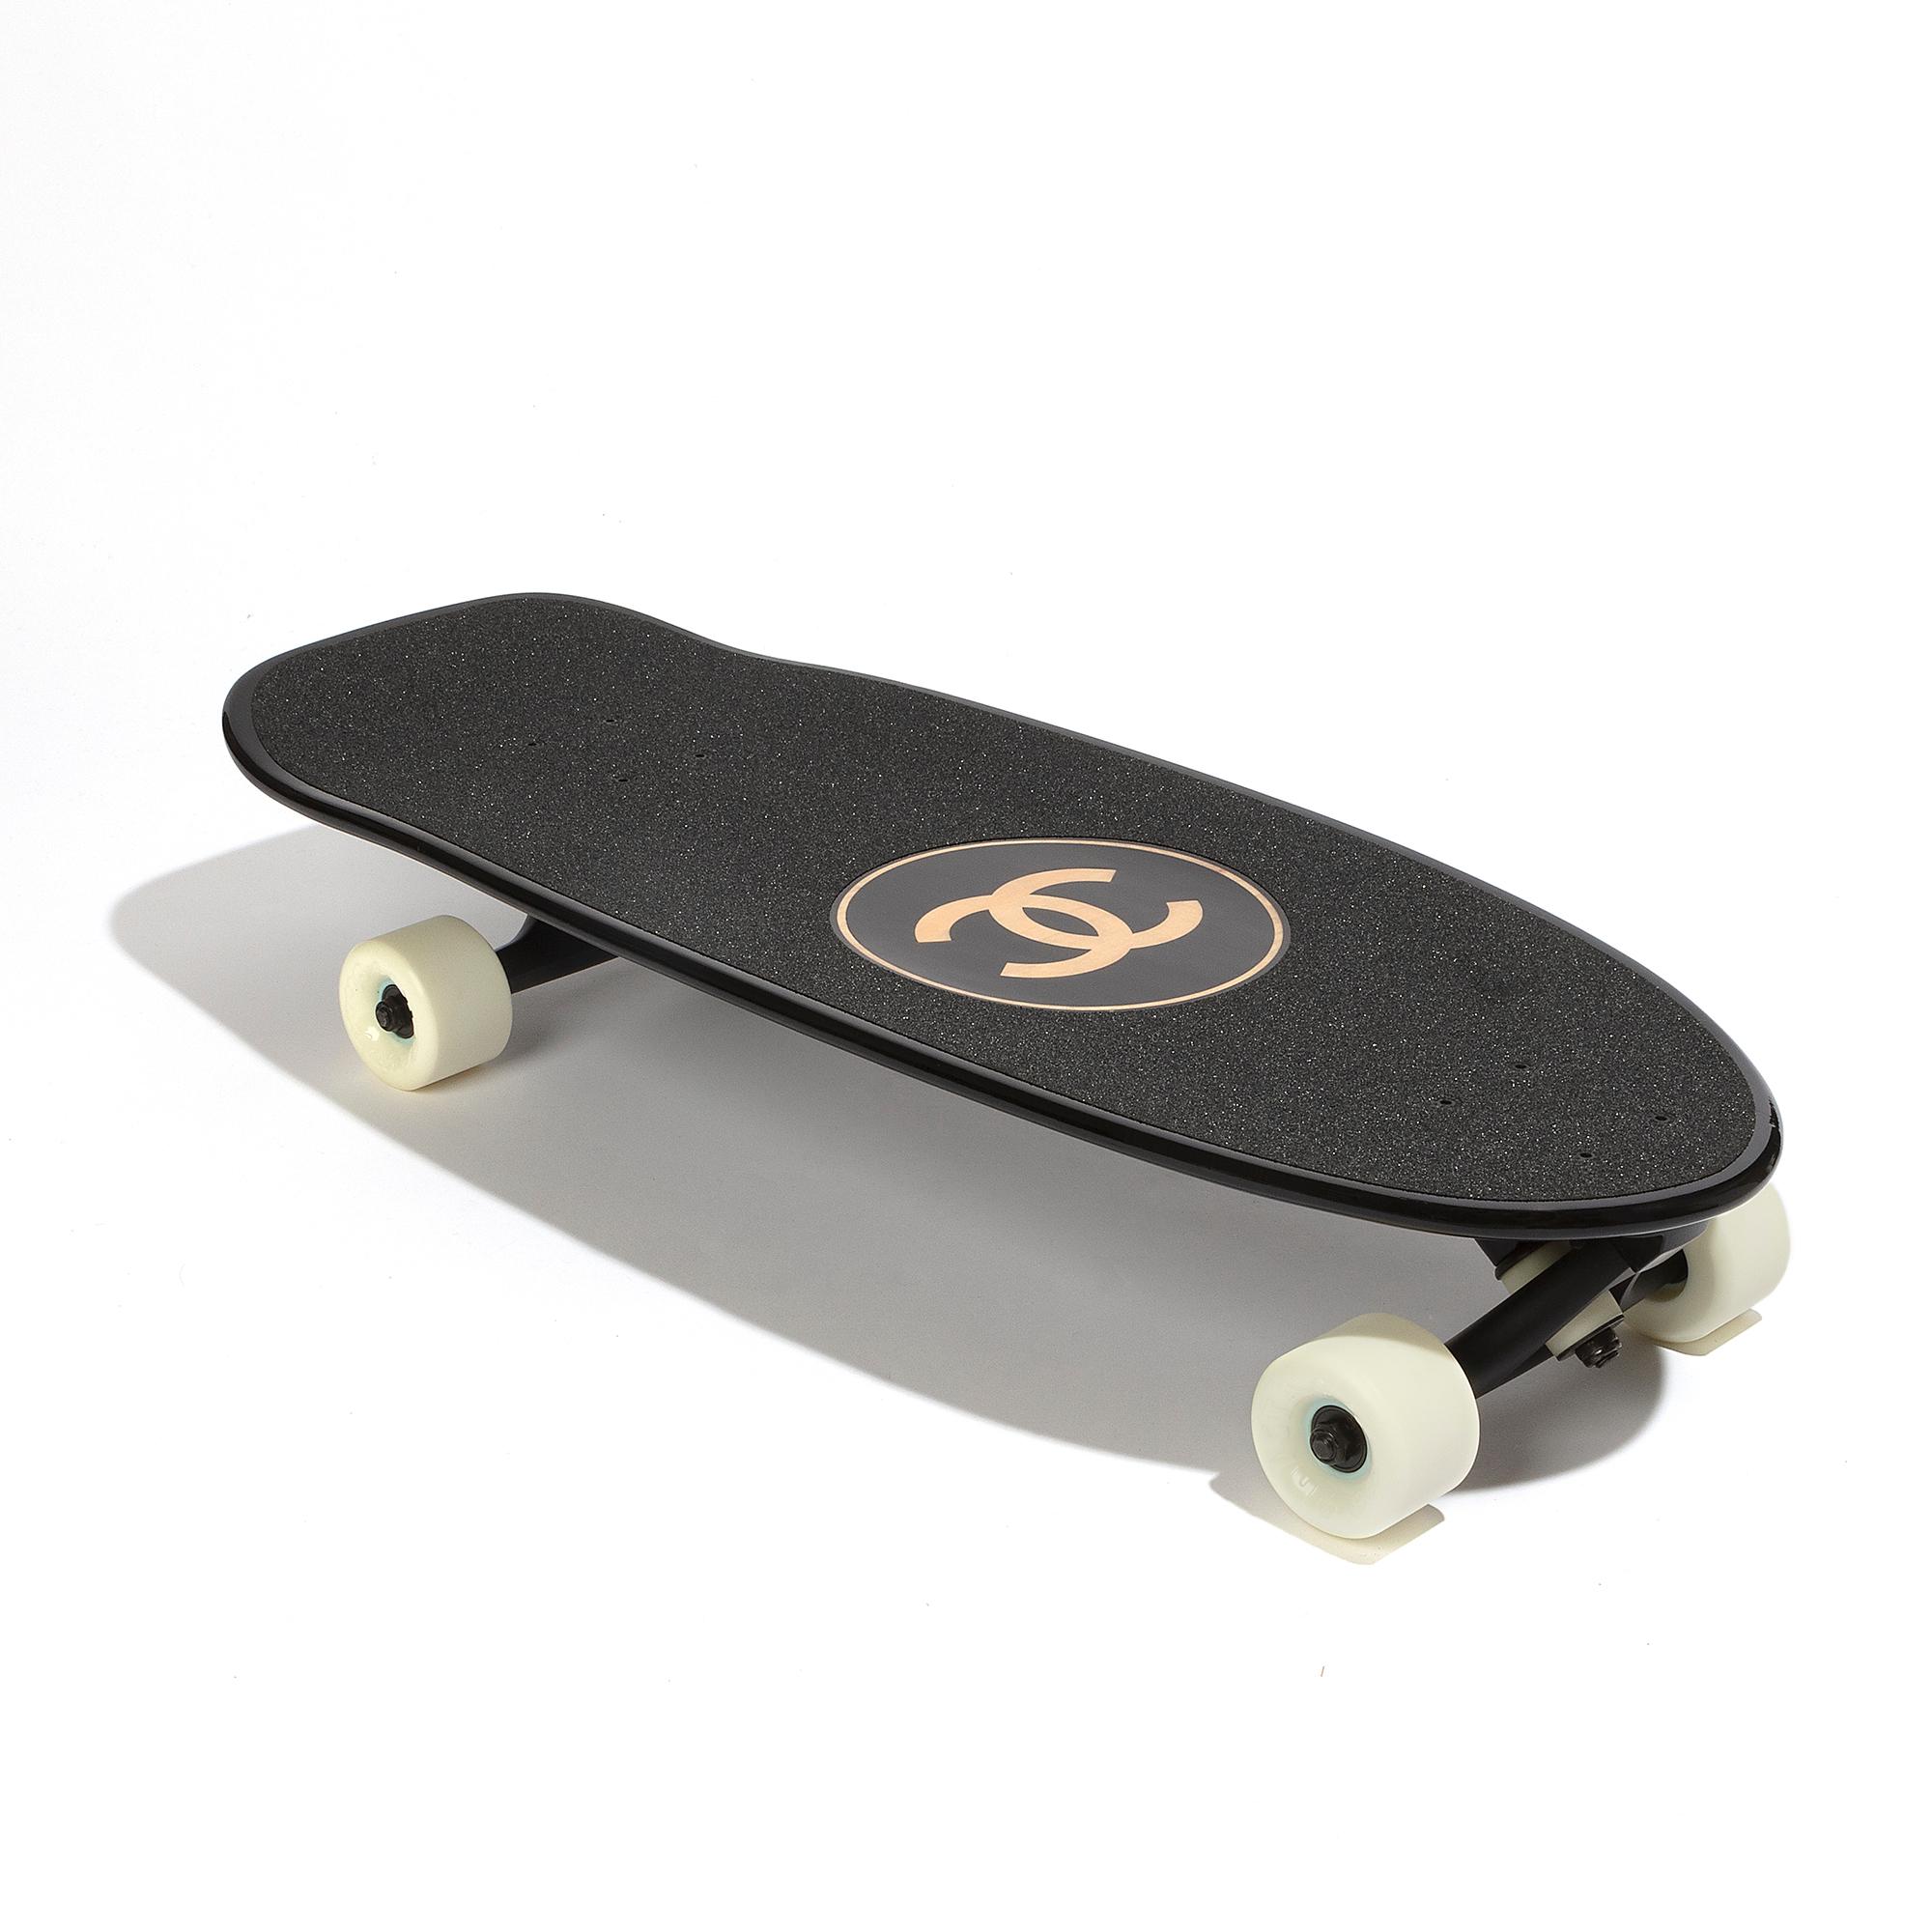 Limited Edition 2019 Skateboard 1